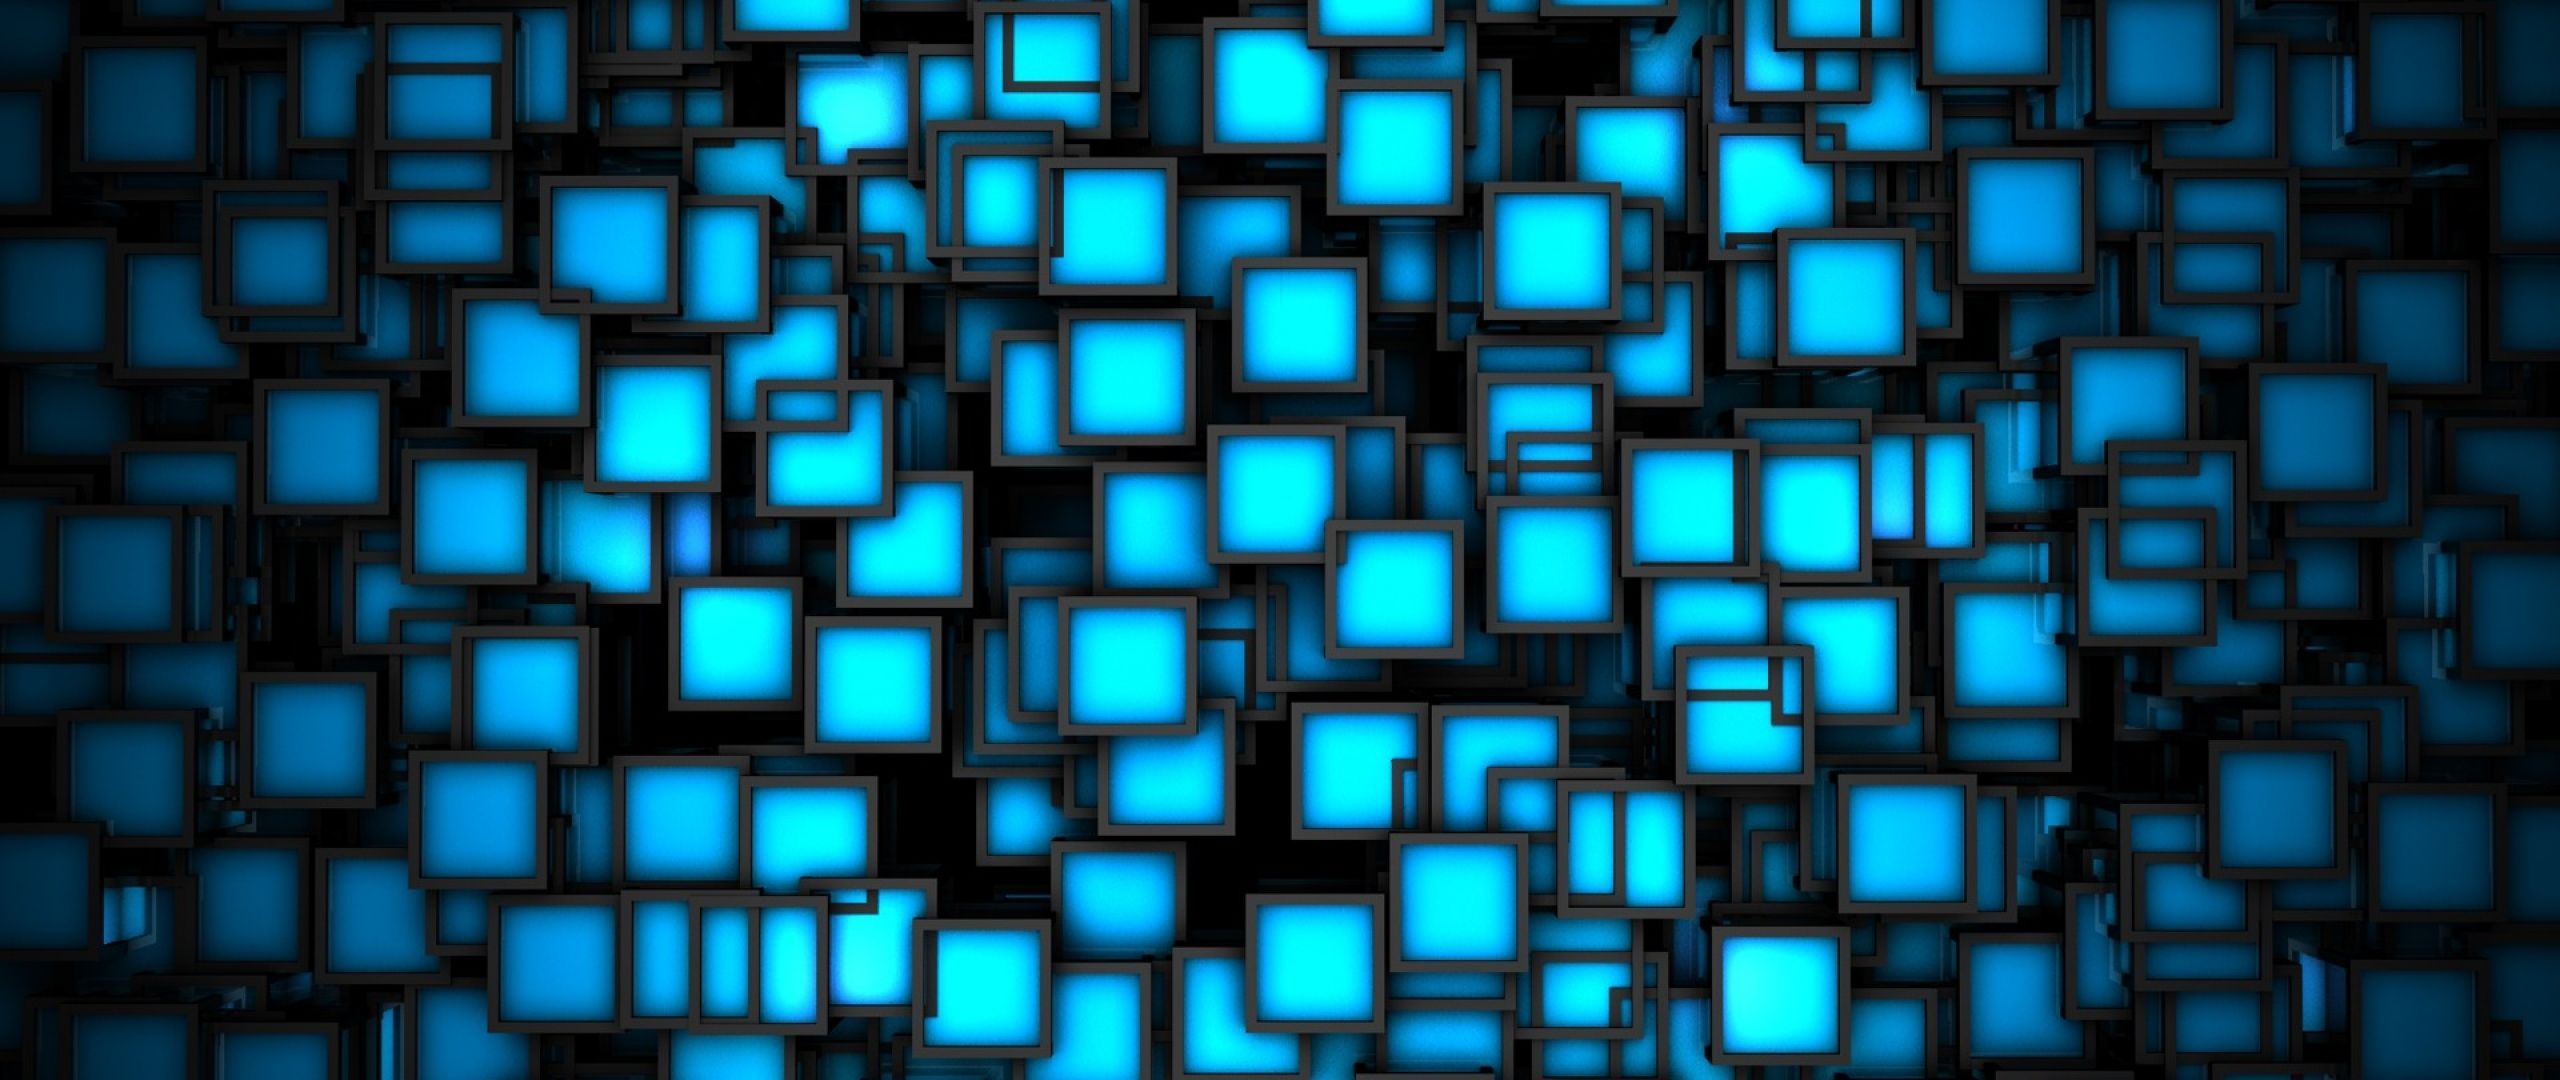 Download Wallpaper 2560x1080 Black, Blue, Bright, Squares ...